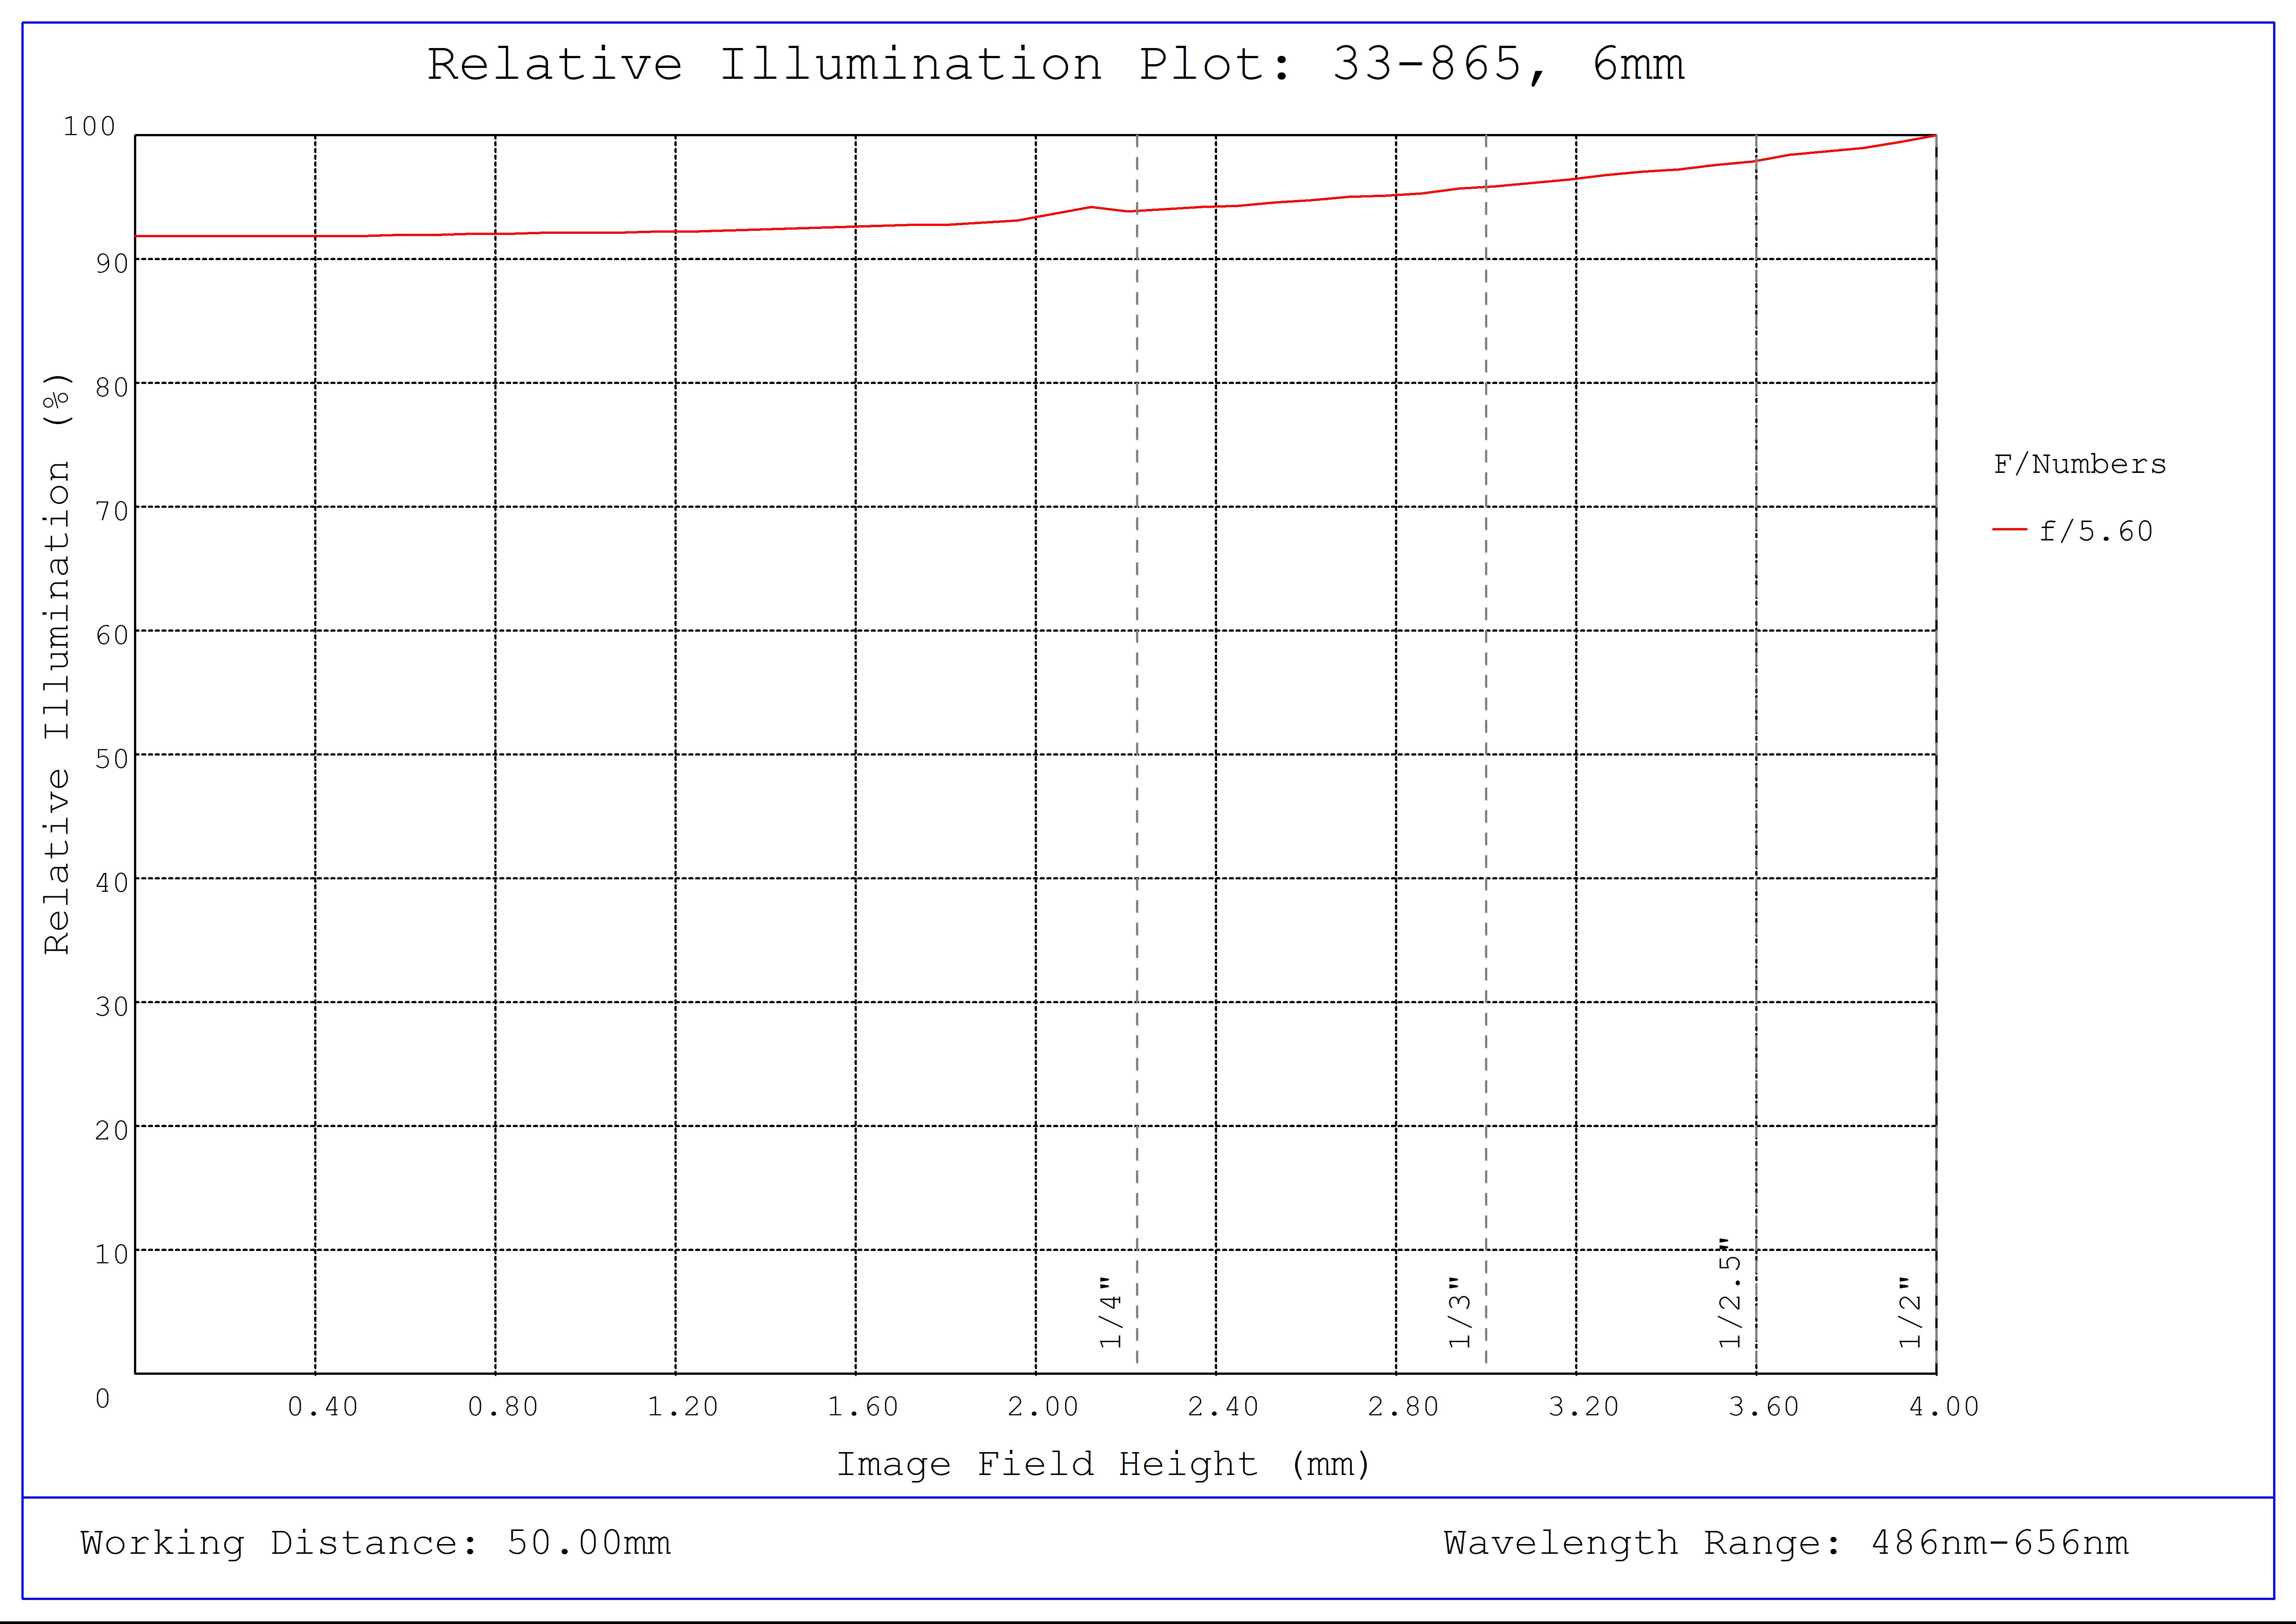 #33-865, 6mm, f/5.6 UCi Series Fixed Focal Length Lens, Relative Illumination Plot